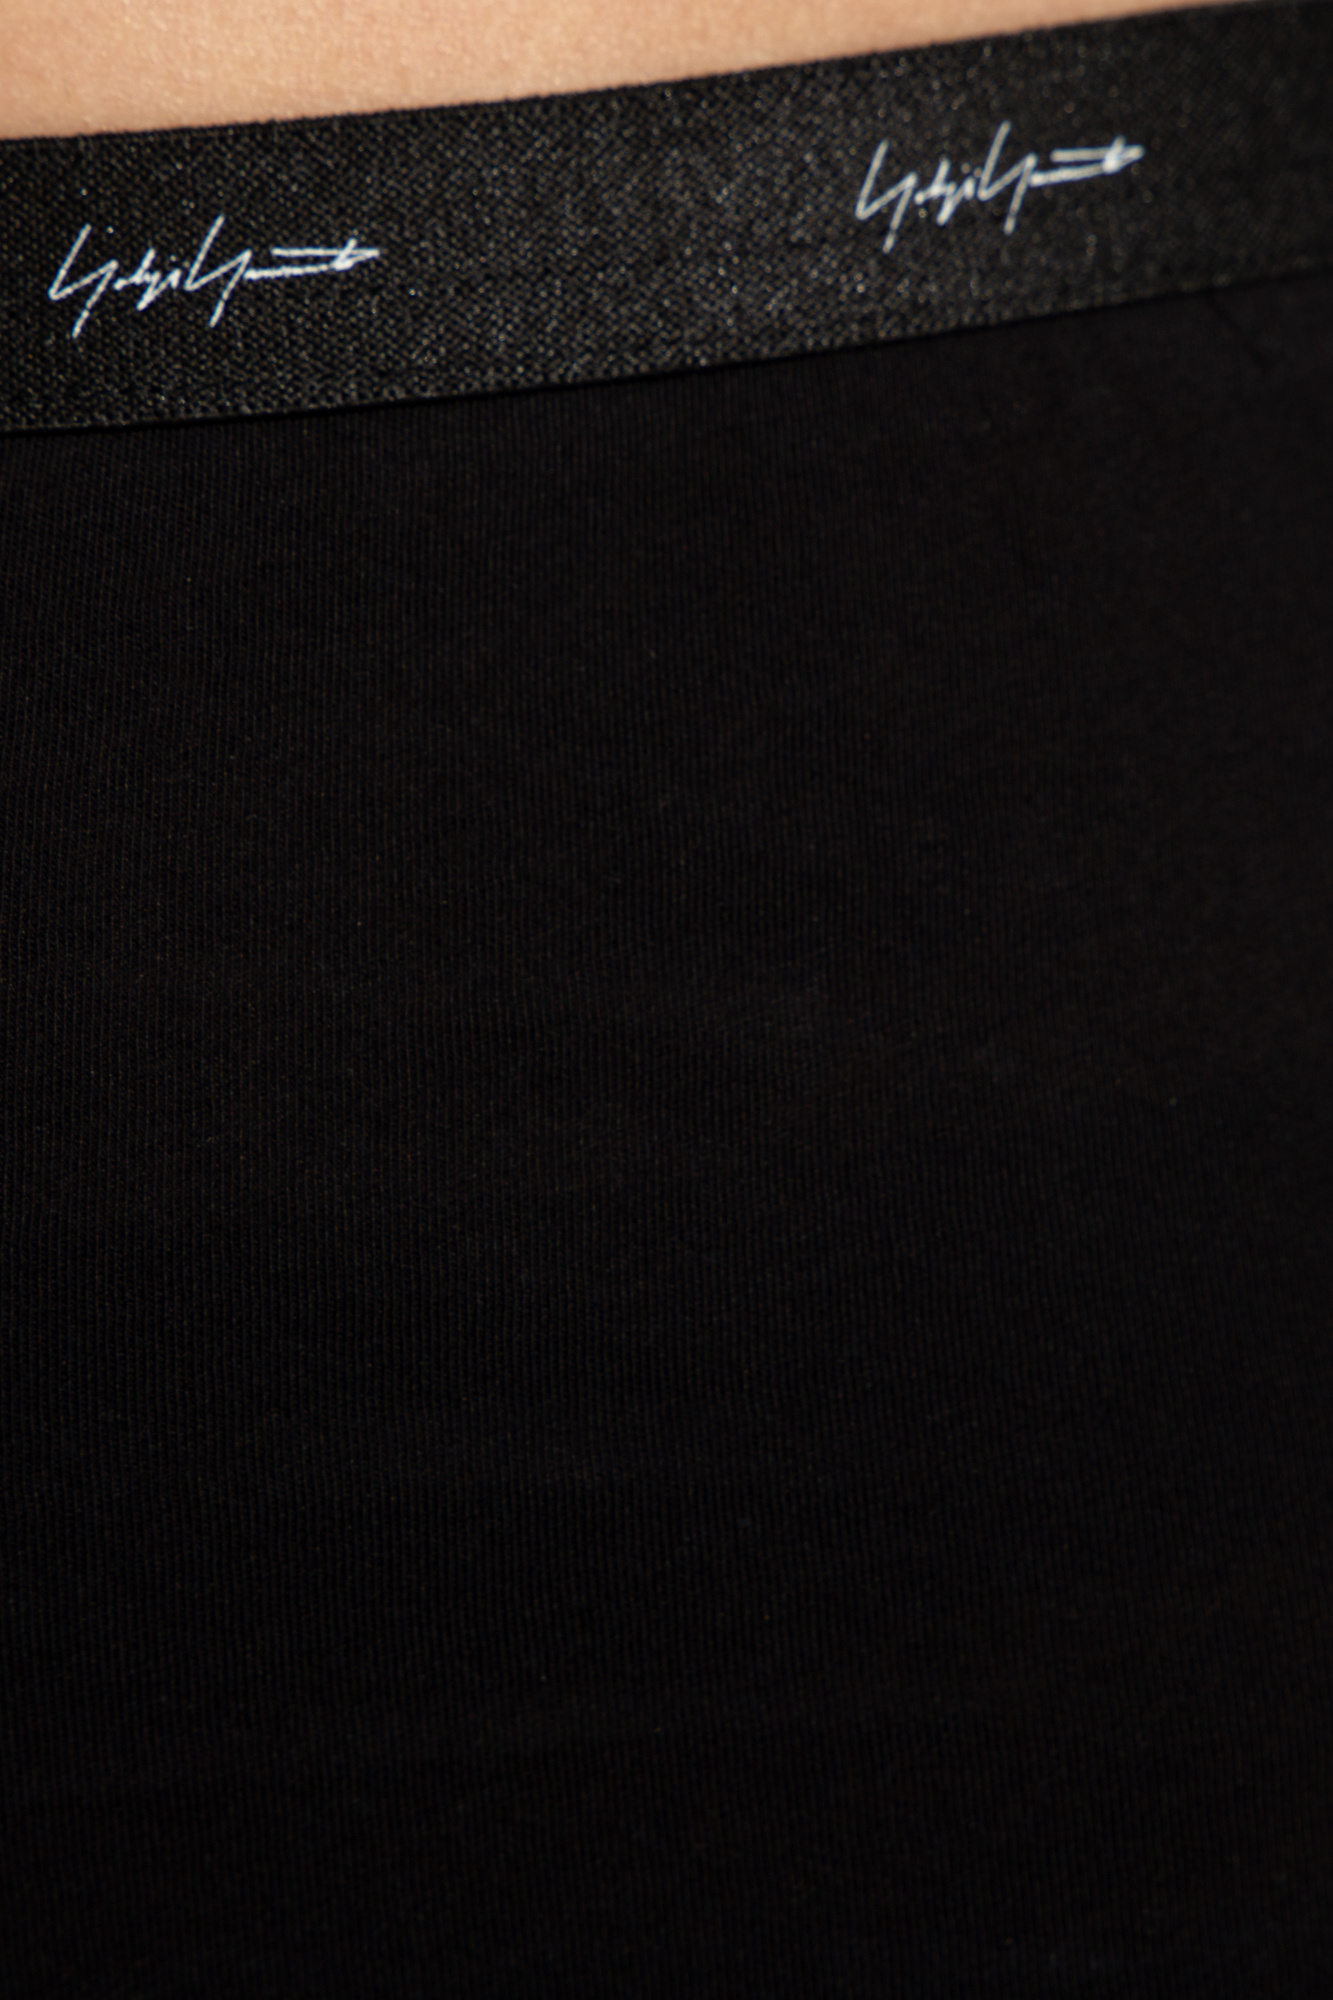 IetpShops Australia - Black Leggings with smile-print Yohji Yamamoto - Under  Armour Training high waist Heat Gear base layer capri sculpt leggings in  charcoal